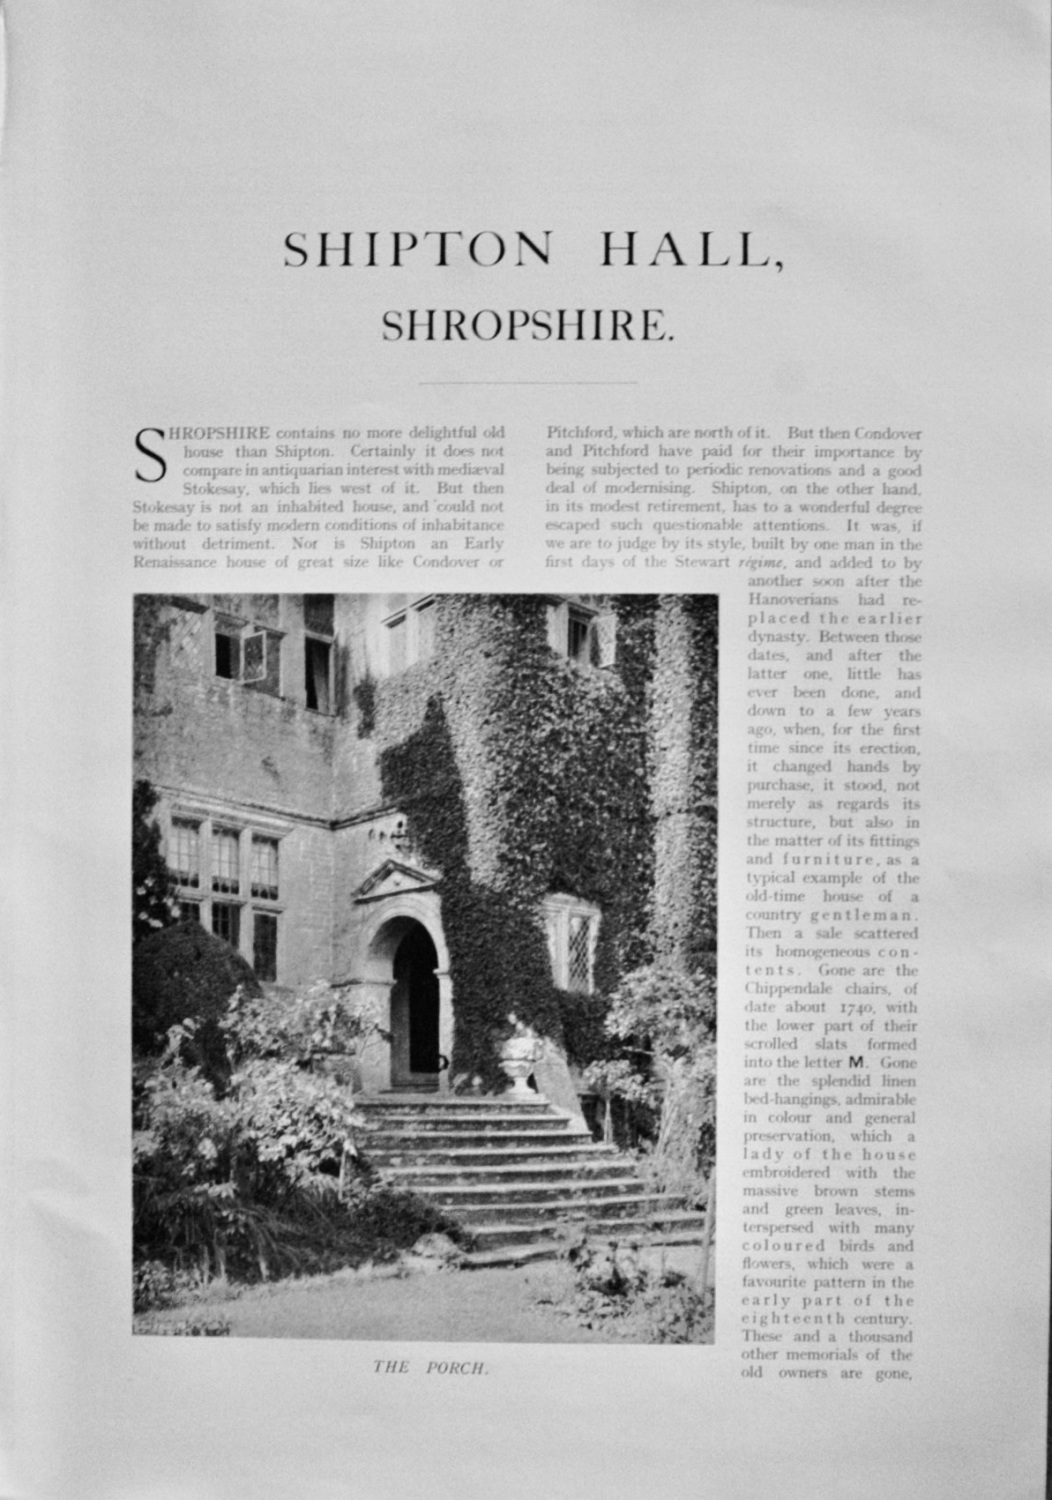 Shipton Hall, Shropshire - 1929